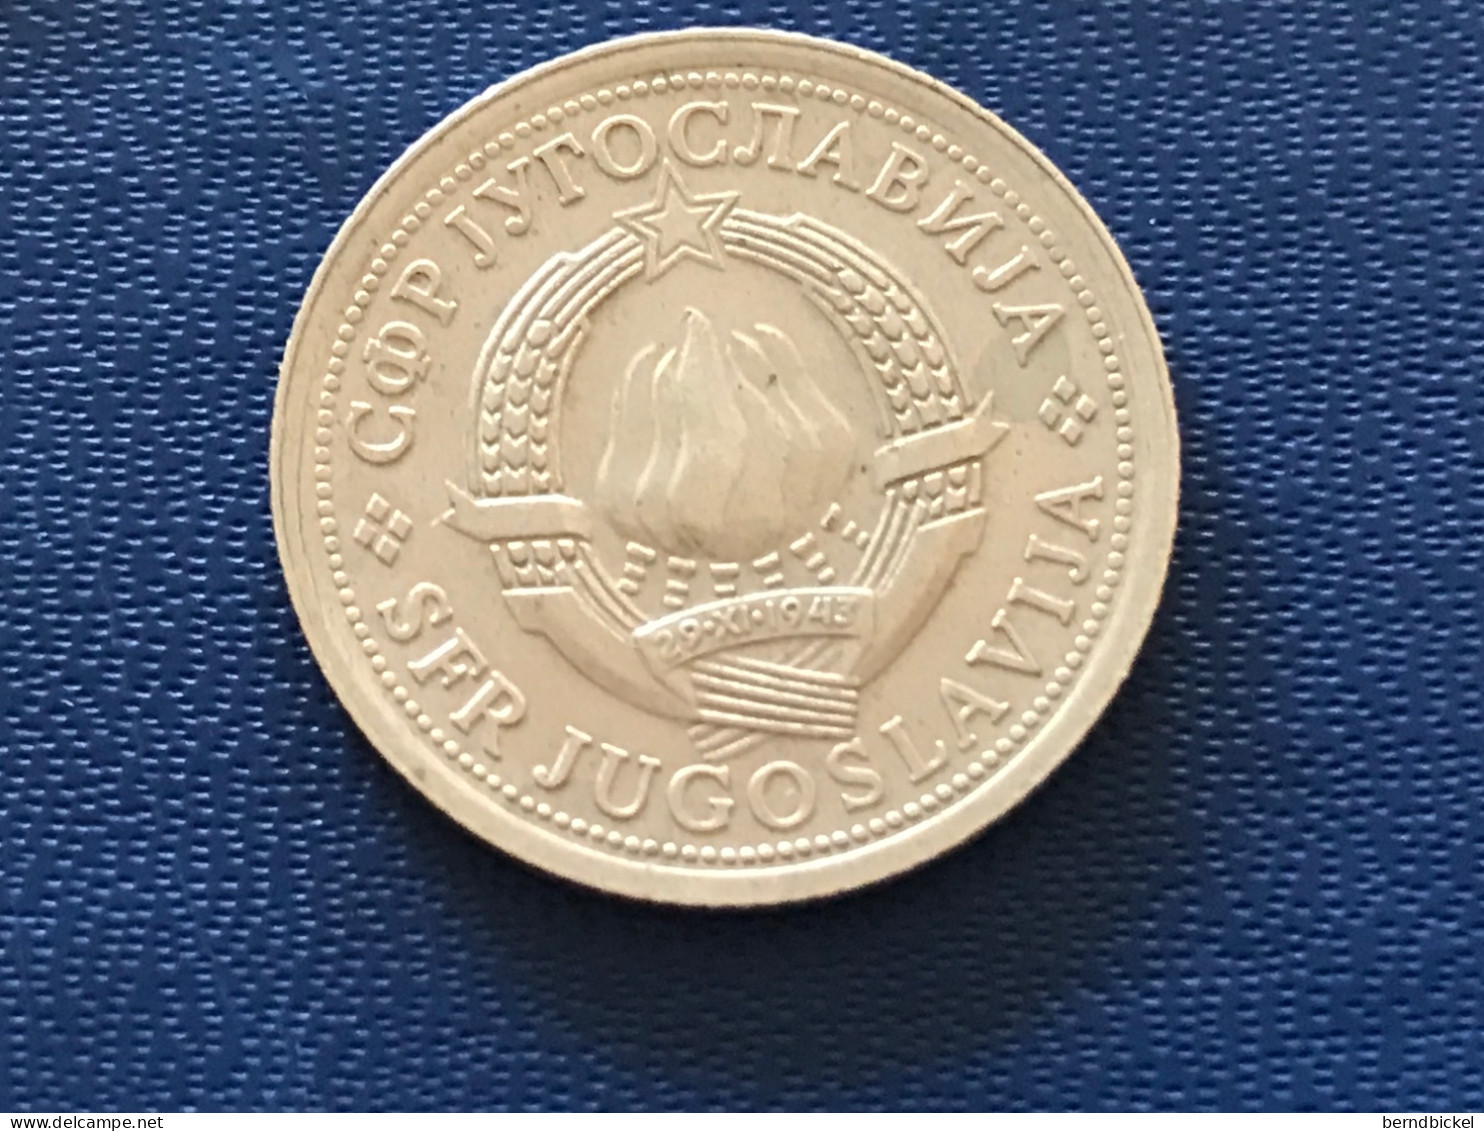 Münze Münzen Umlaufmünze Jugoslawien 1 Dinar 1976 - Jugoslawien